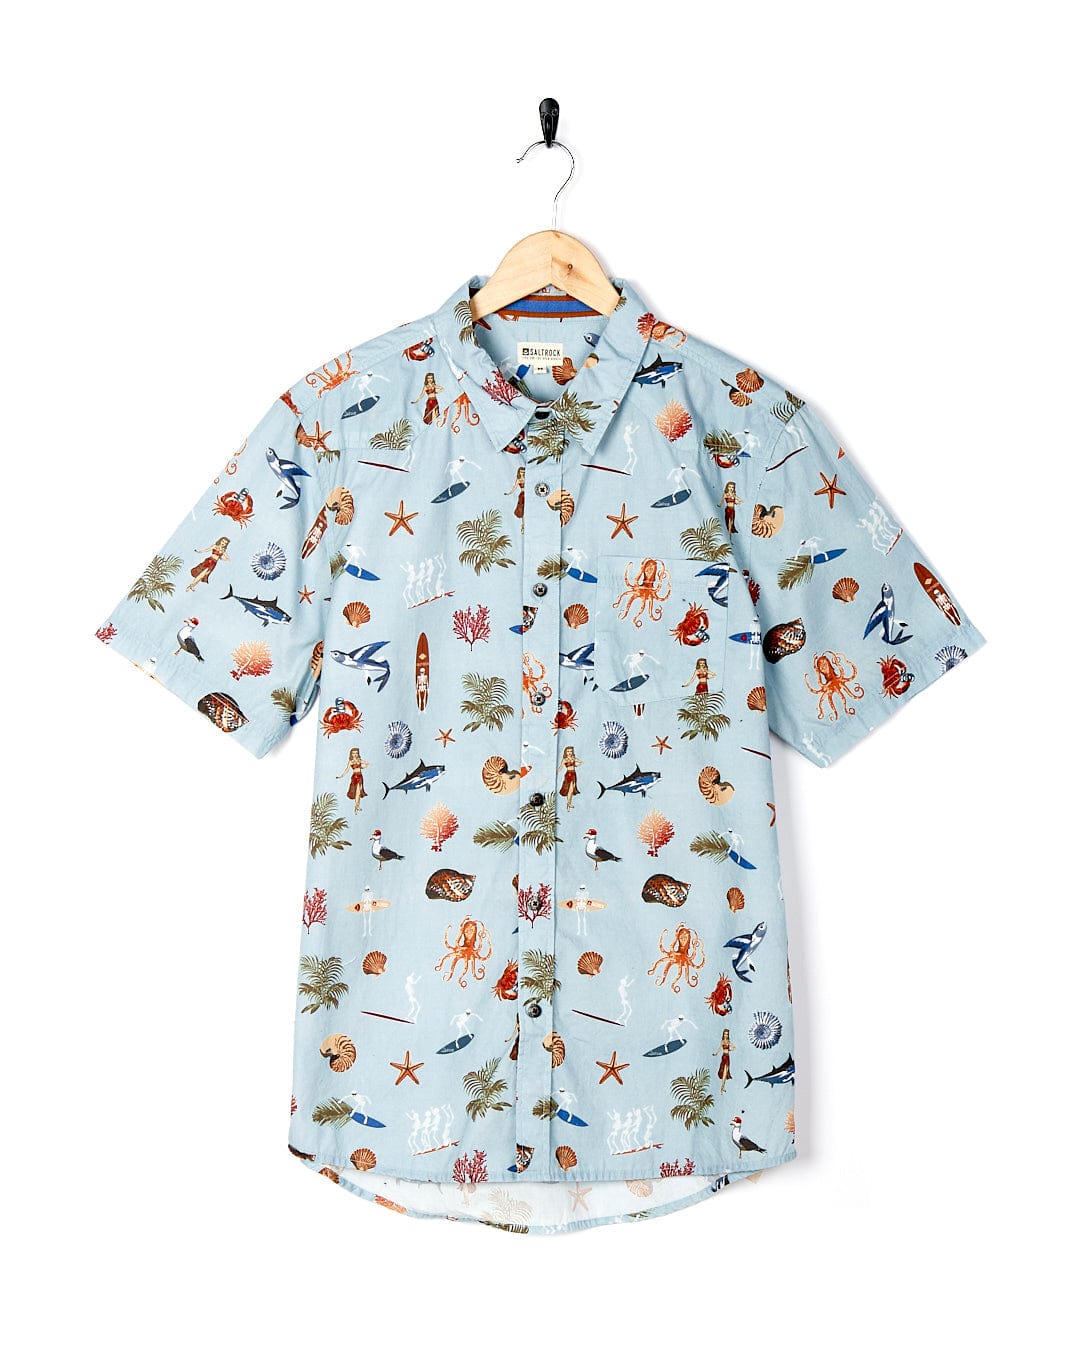 A Saltrock Ruan - Mens Washed Short Sleeve Shirt with holiday vibes featuring an ocean print, embracing the Hawaiian shirt trend.